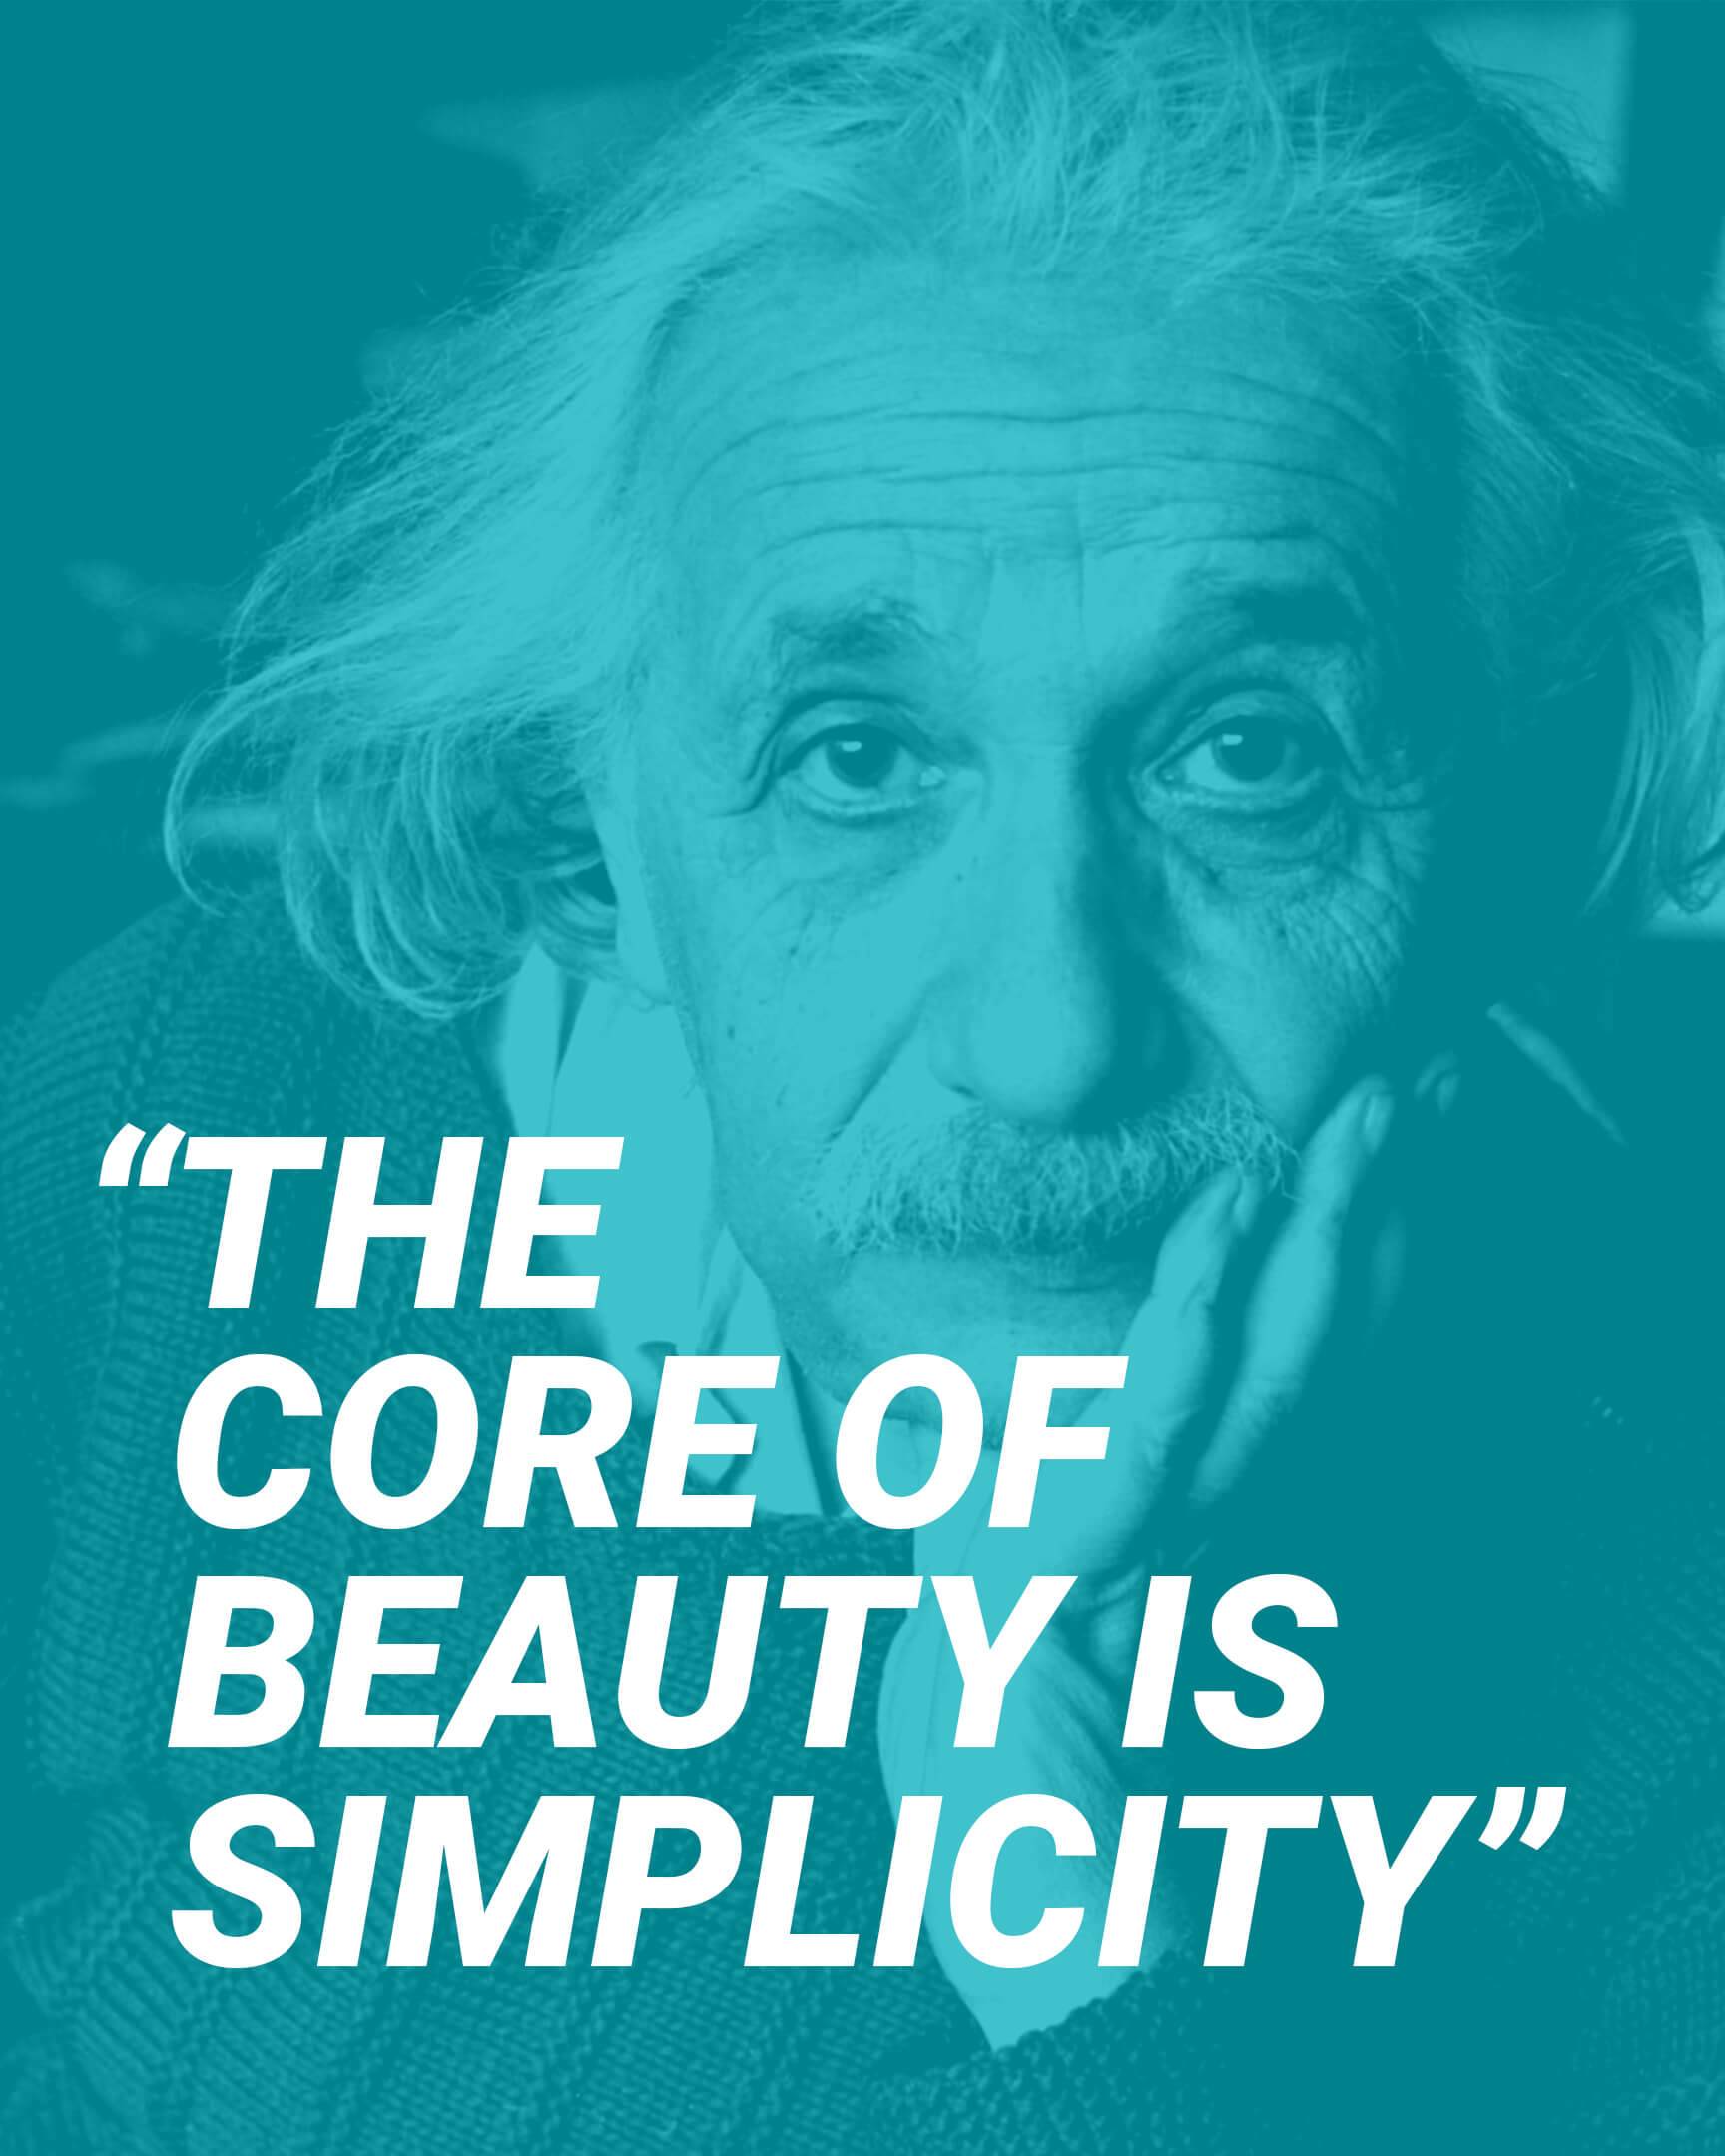 “The core of beauty is simplicity” - Albert Einstein